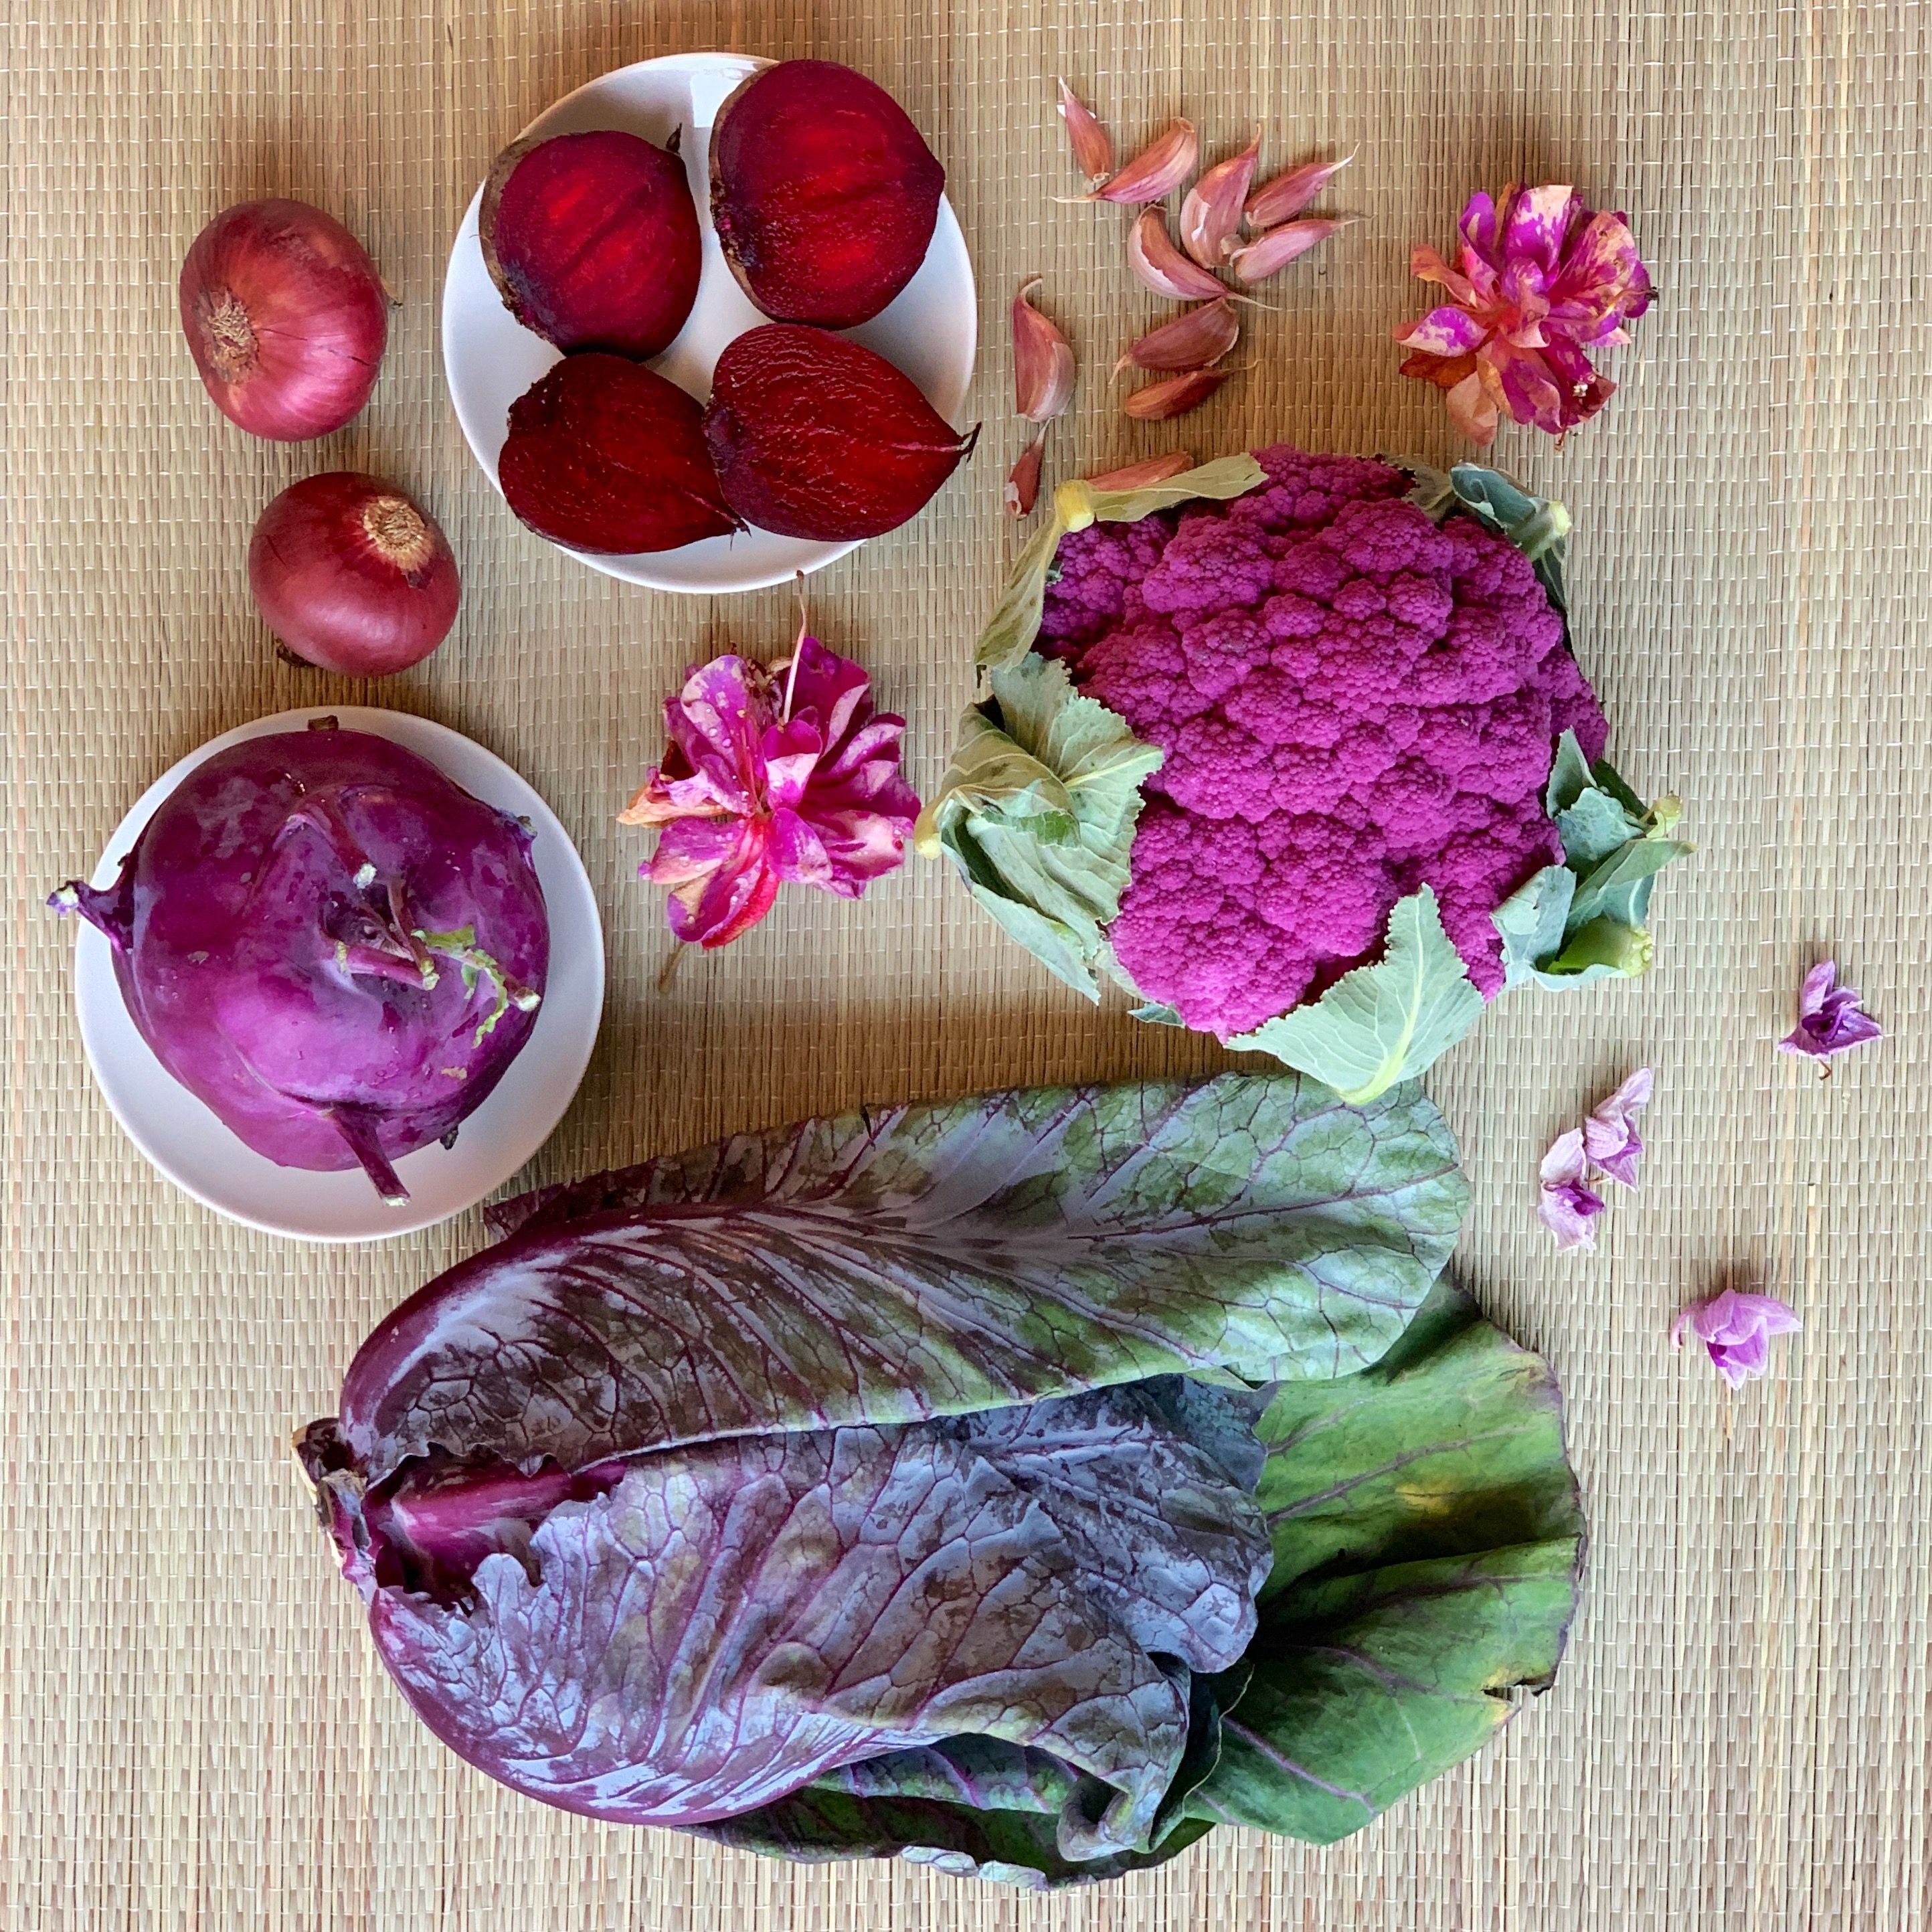 Ingredients for Purple Veggie Rolls